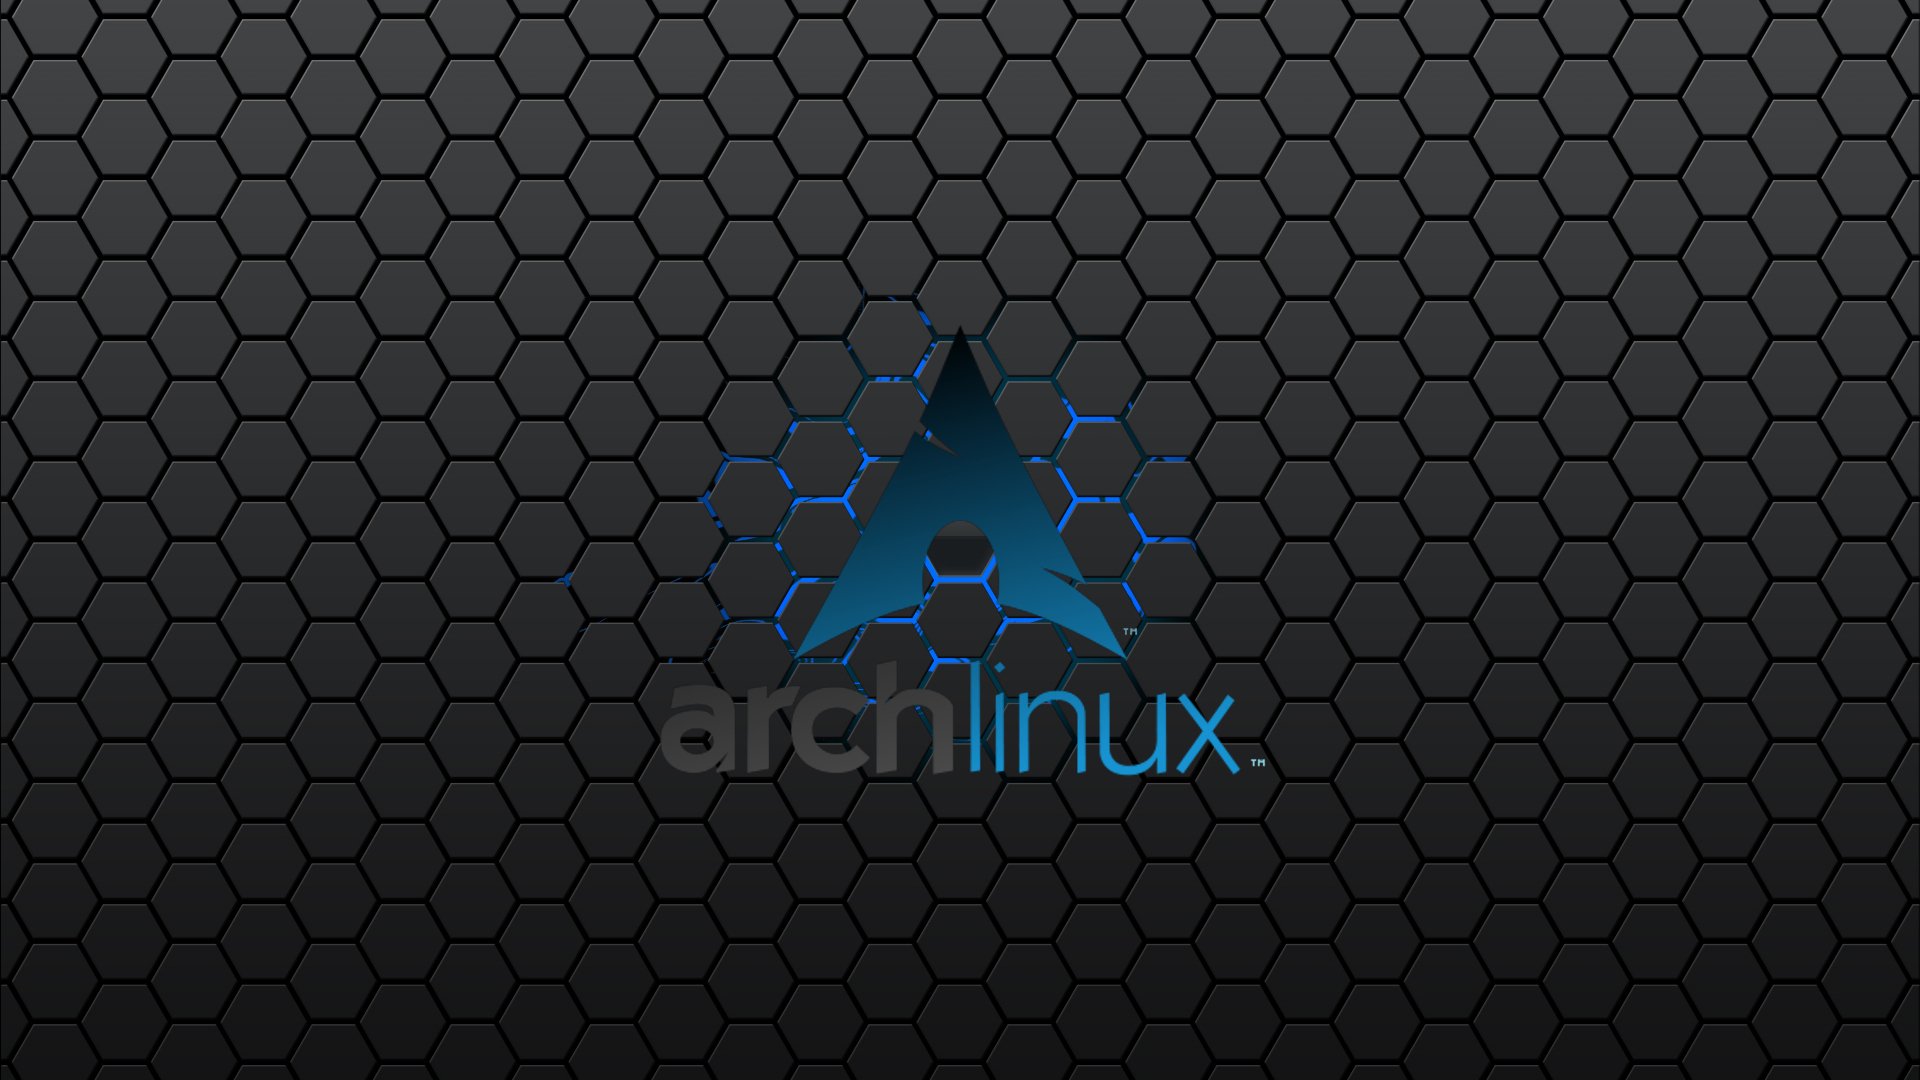 Free download 47] Black Arch Linux Wallpaper [1920x1080] for your Desktop, Mobile & Tablet. Explore Archlinux Background